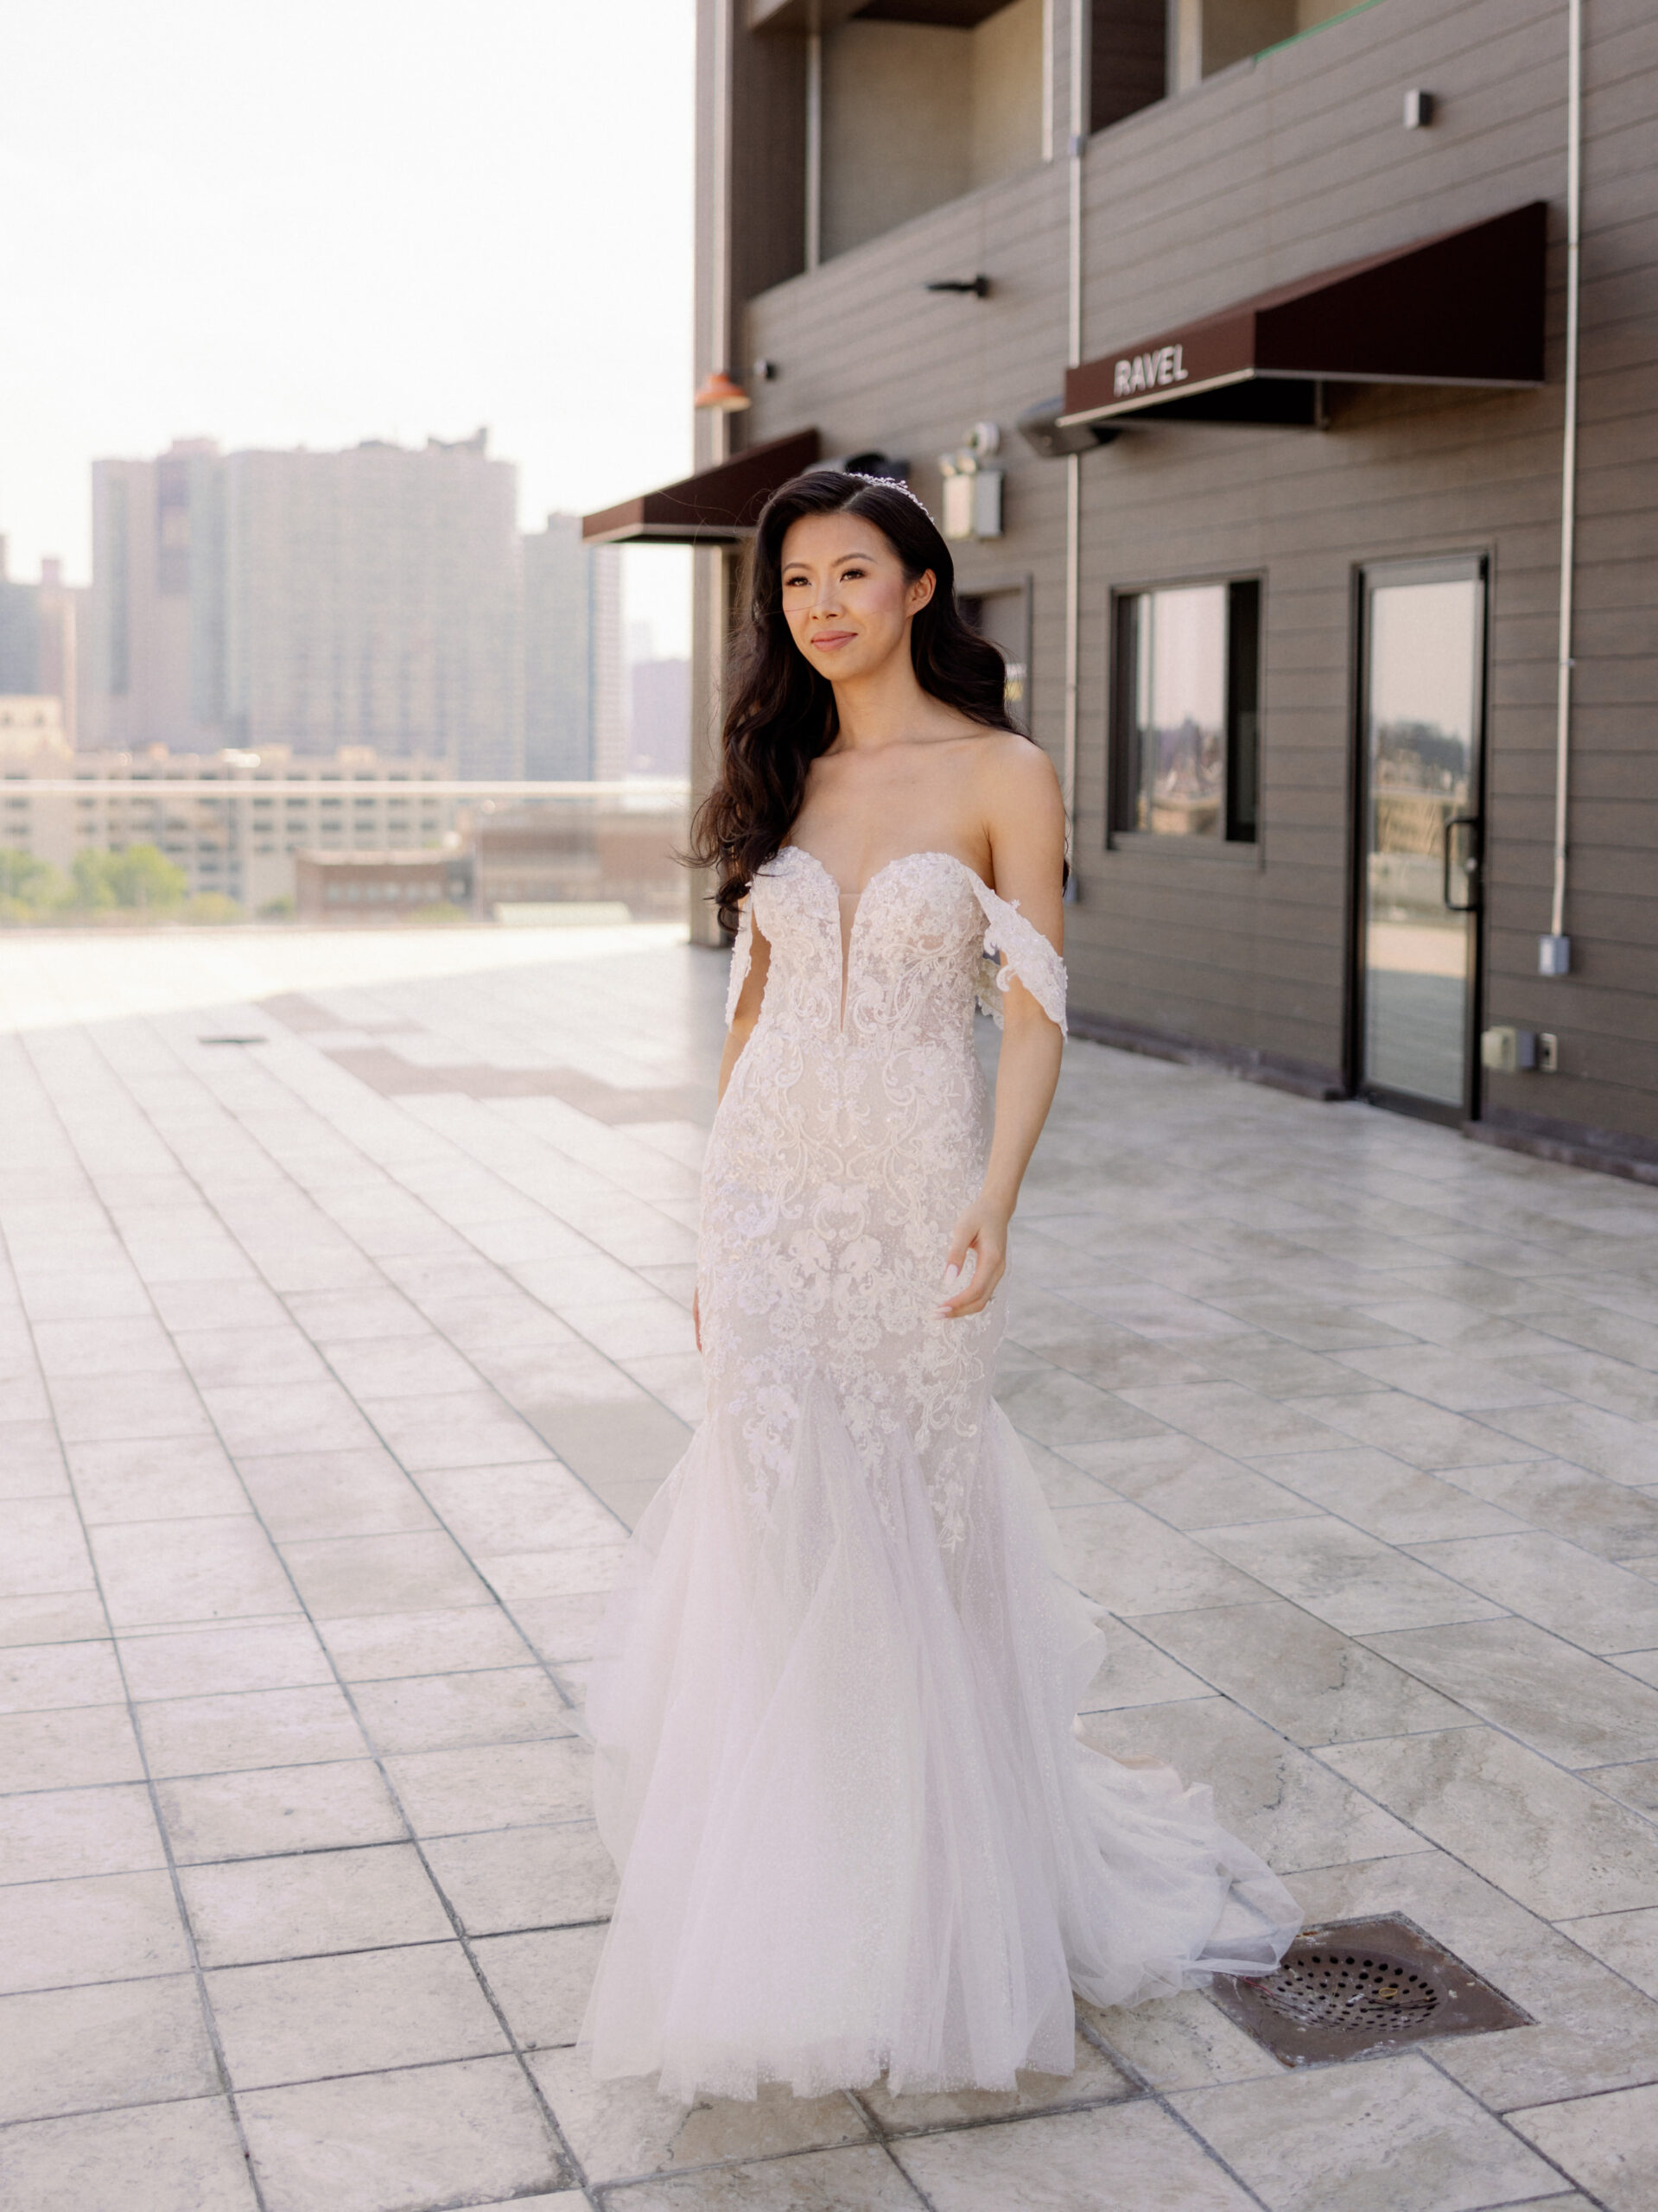 The bride is walking towards her groom. 2023 wedding dress image by Jenny Fu Studio